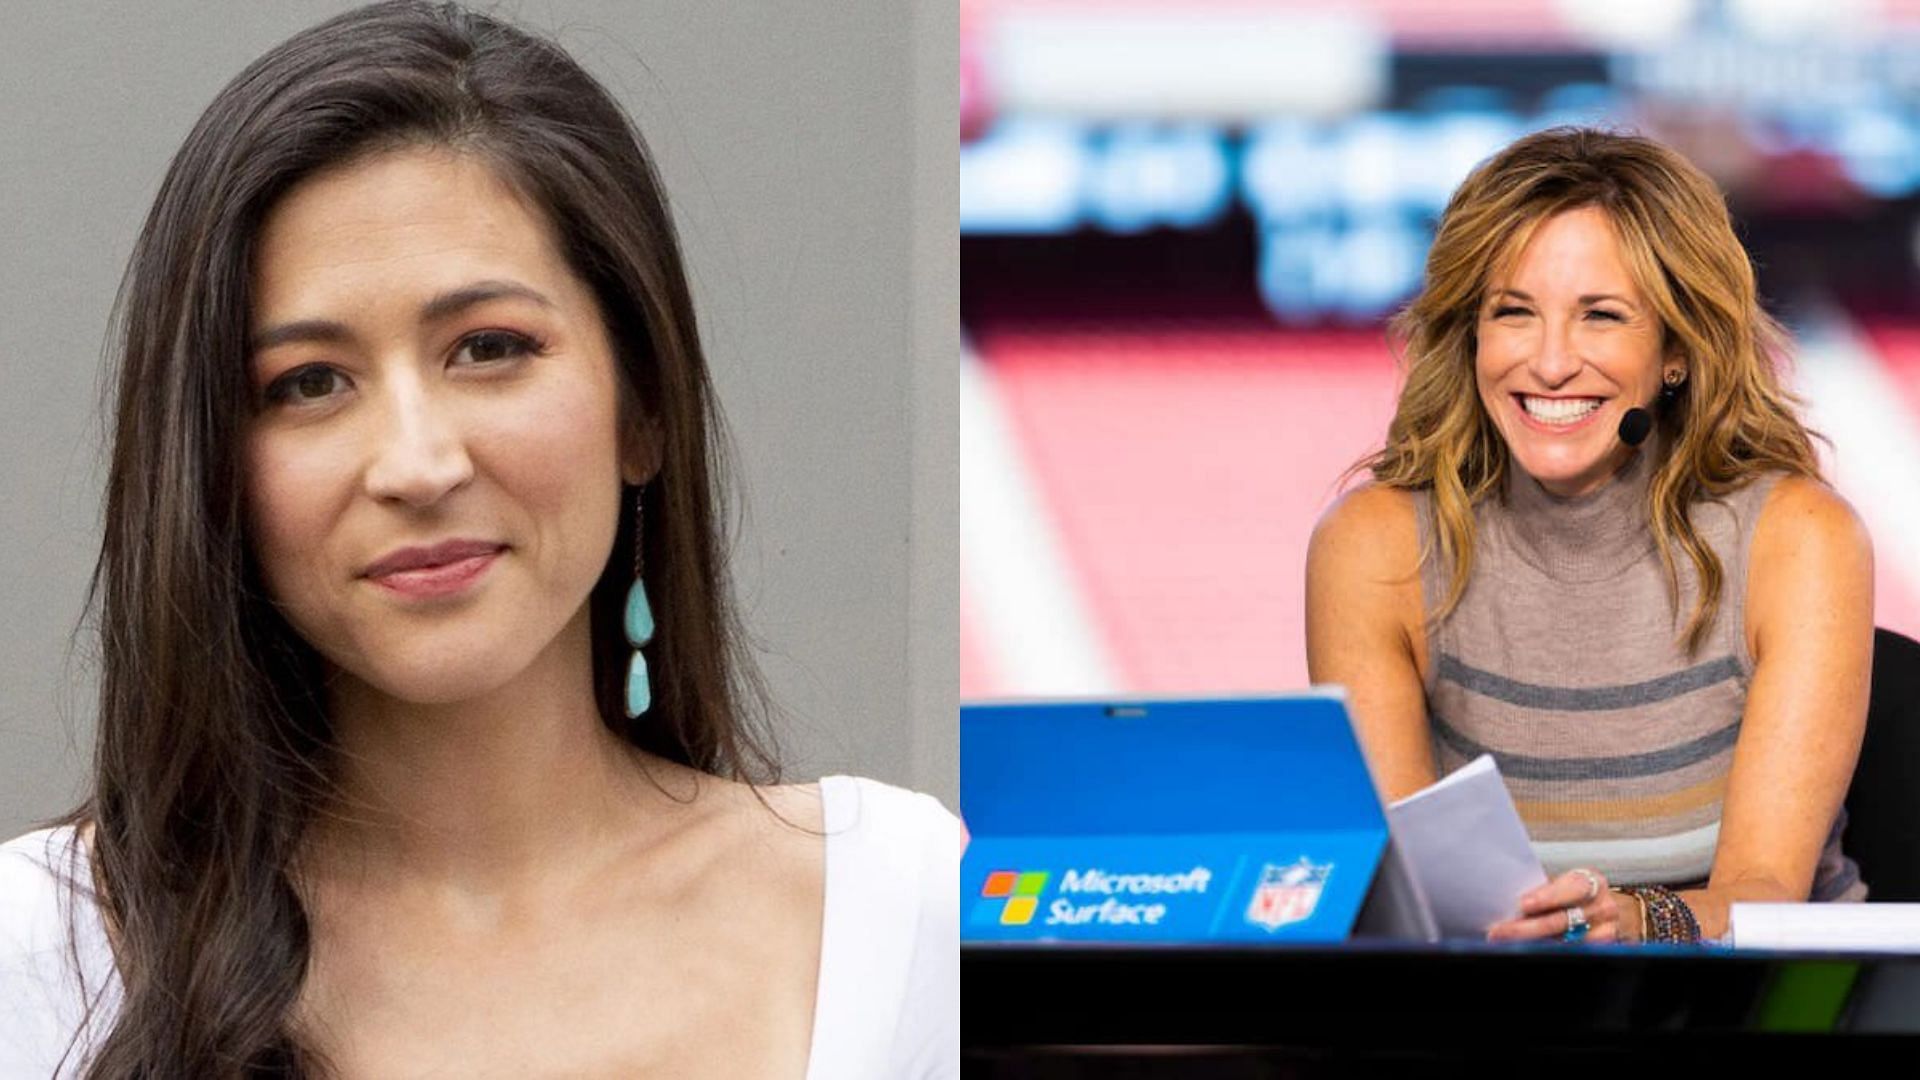 Could Mina Kimes (L) replace Suzy Kolber (R) on ESPN Monday Night Countdown? 